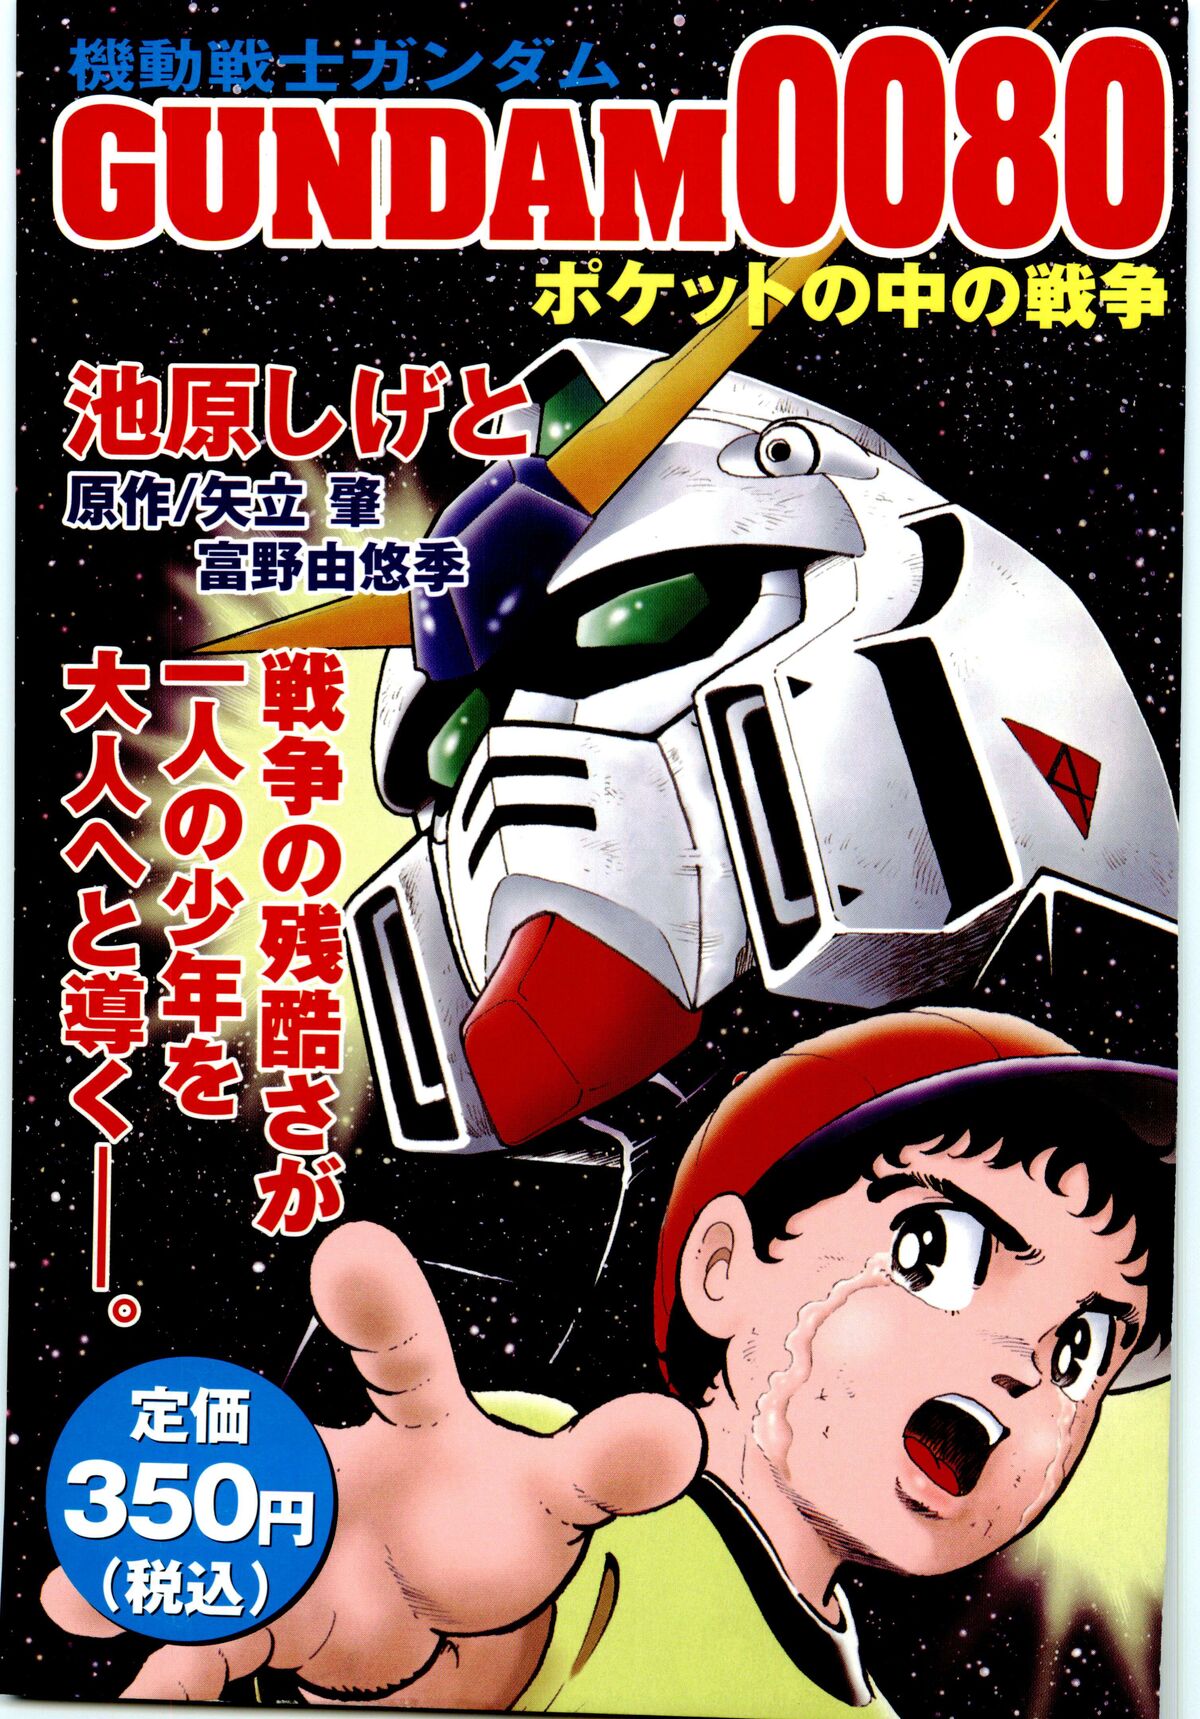 Mobile Suit Gundam 0080: War in the Pocket | The Gundam Wiki | Fandom